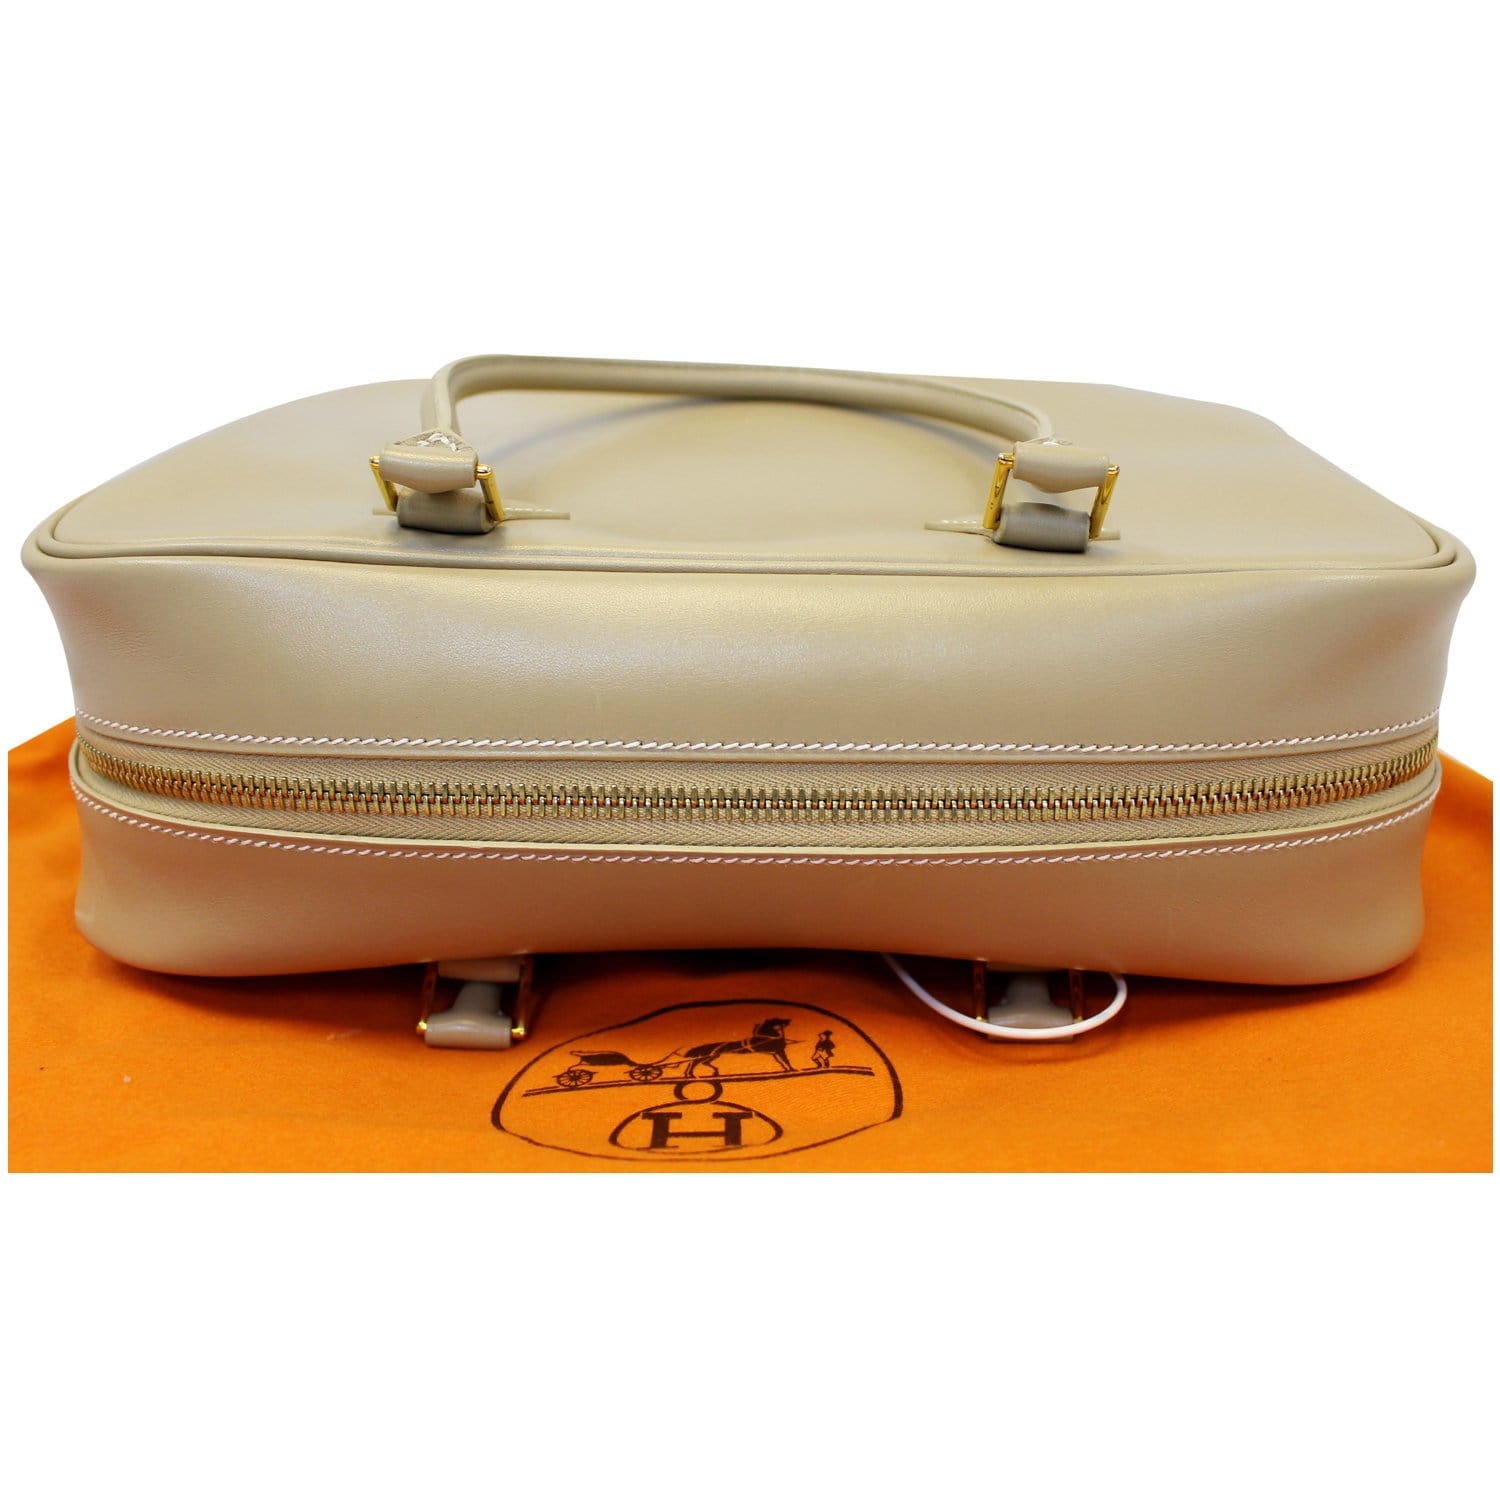 Plume Doc Bag 38, Used & Preloved Hermes Handbag, LXR USA